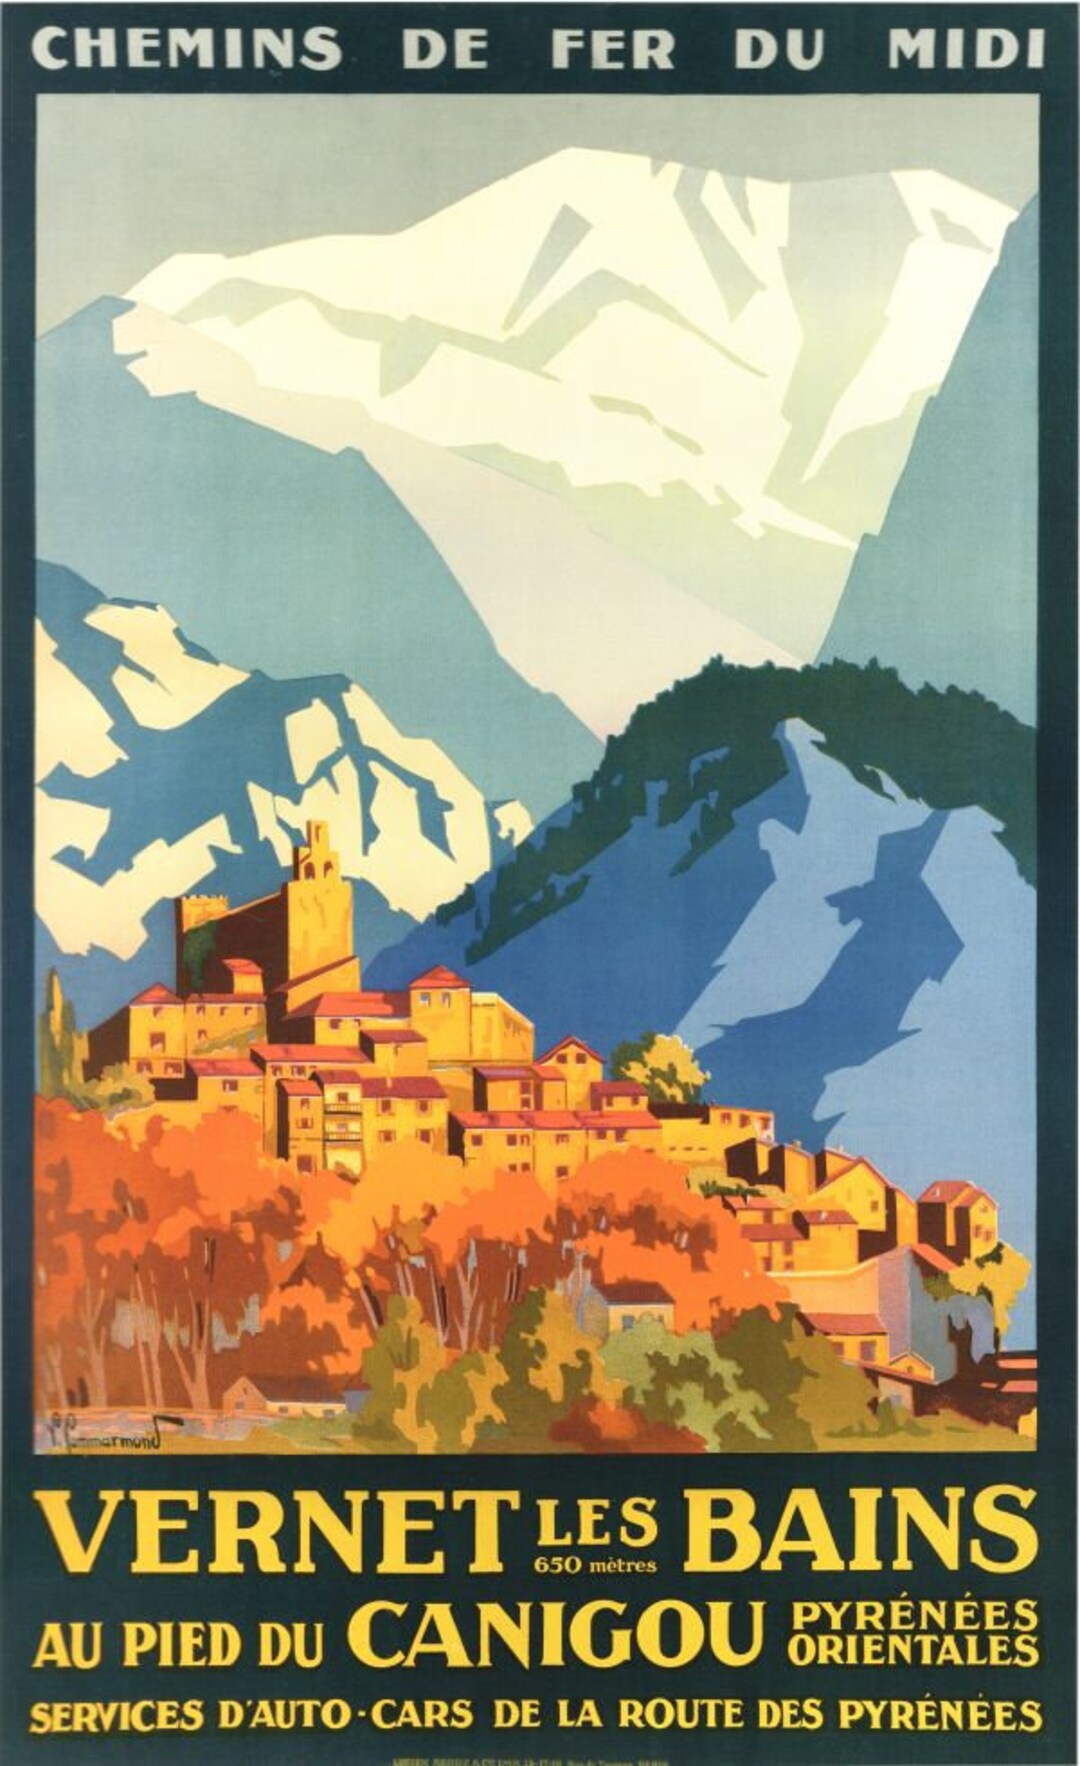 Vintage French Vernet Les Bains Pyrenees Tourism Poster image